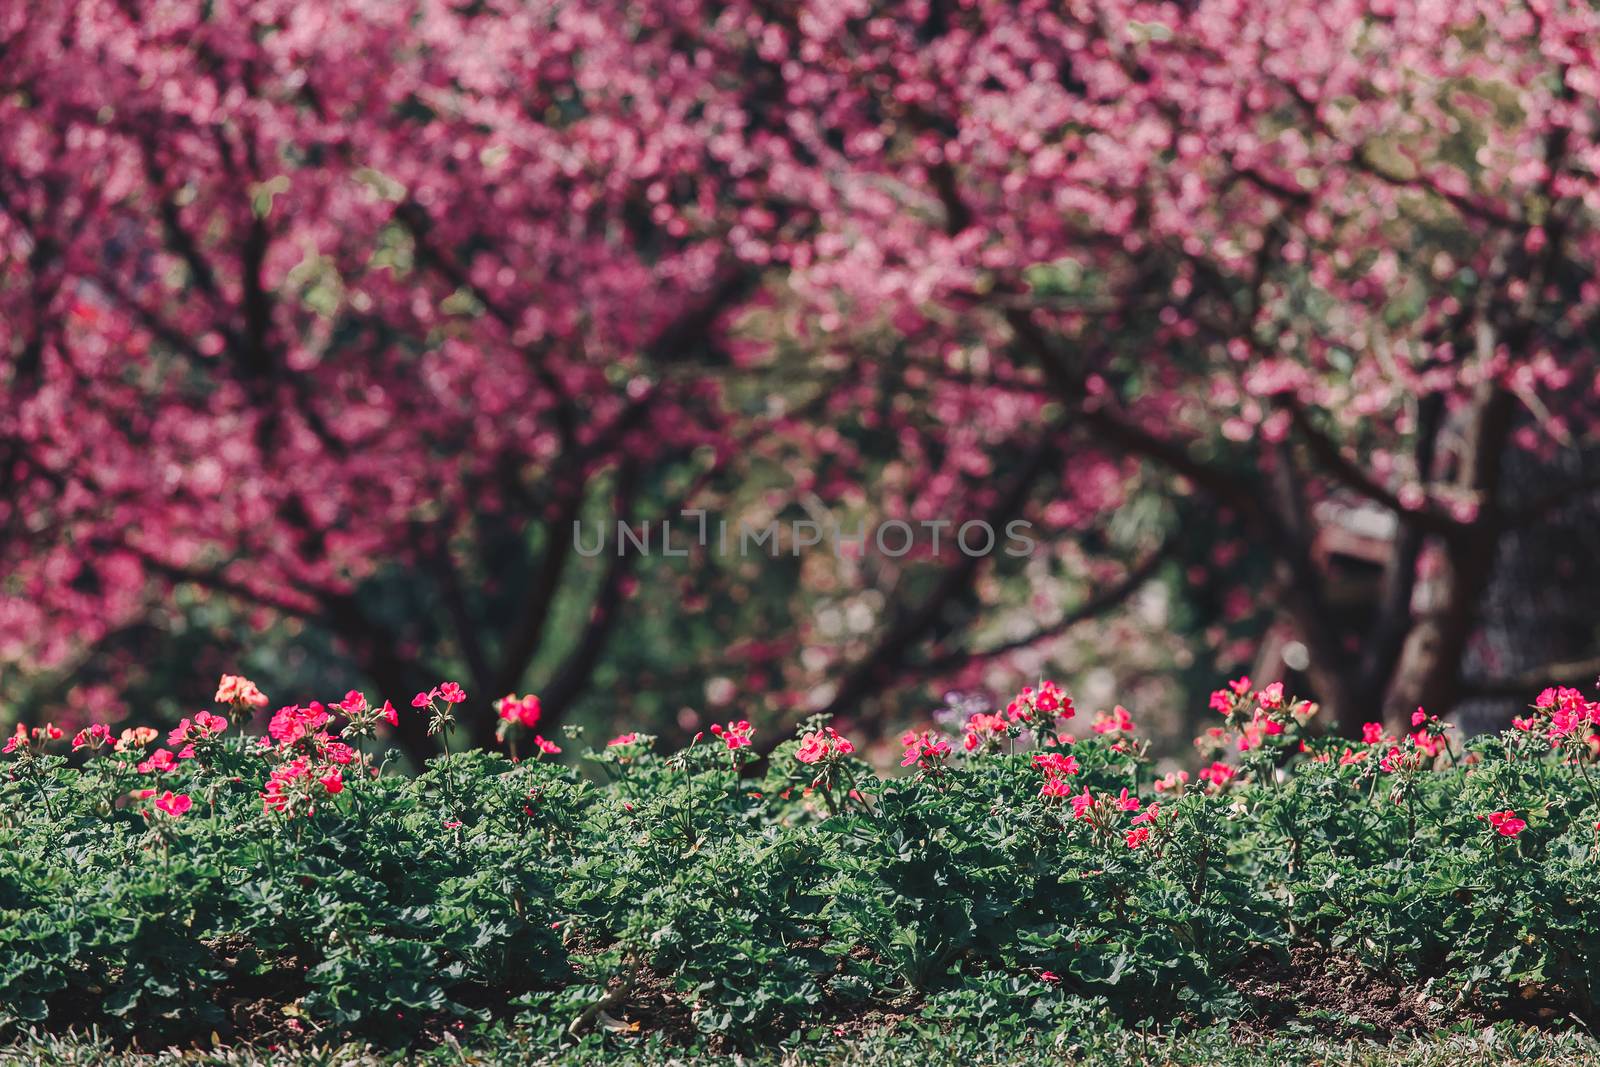 Cherry Blossom and Sakura wallpaper  by freedomnaruk